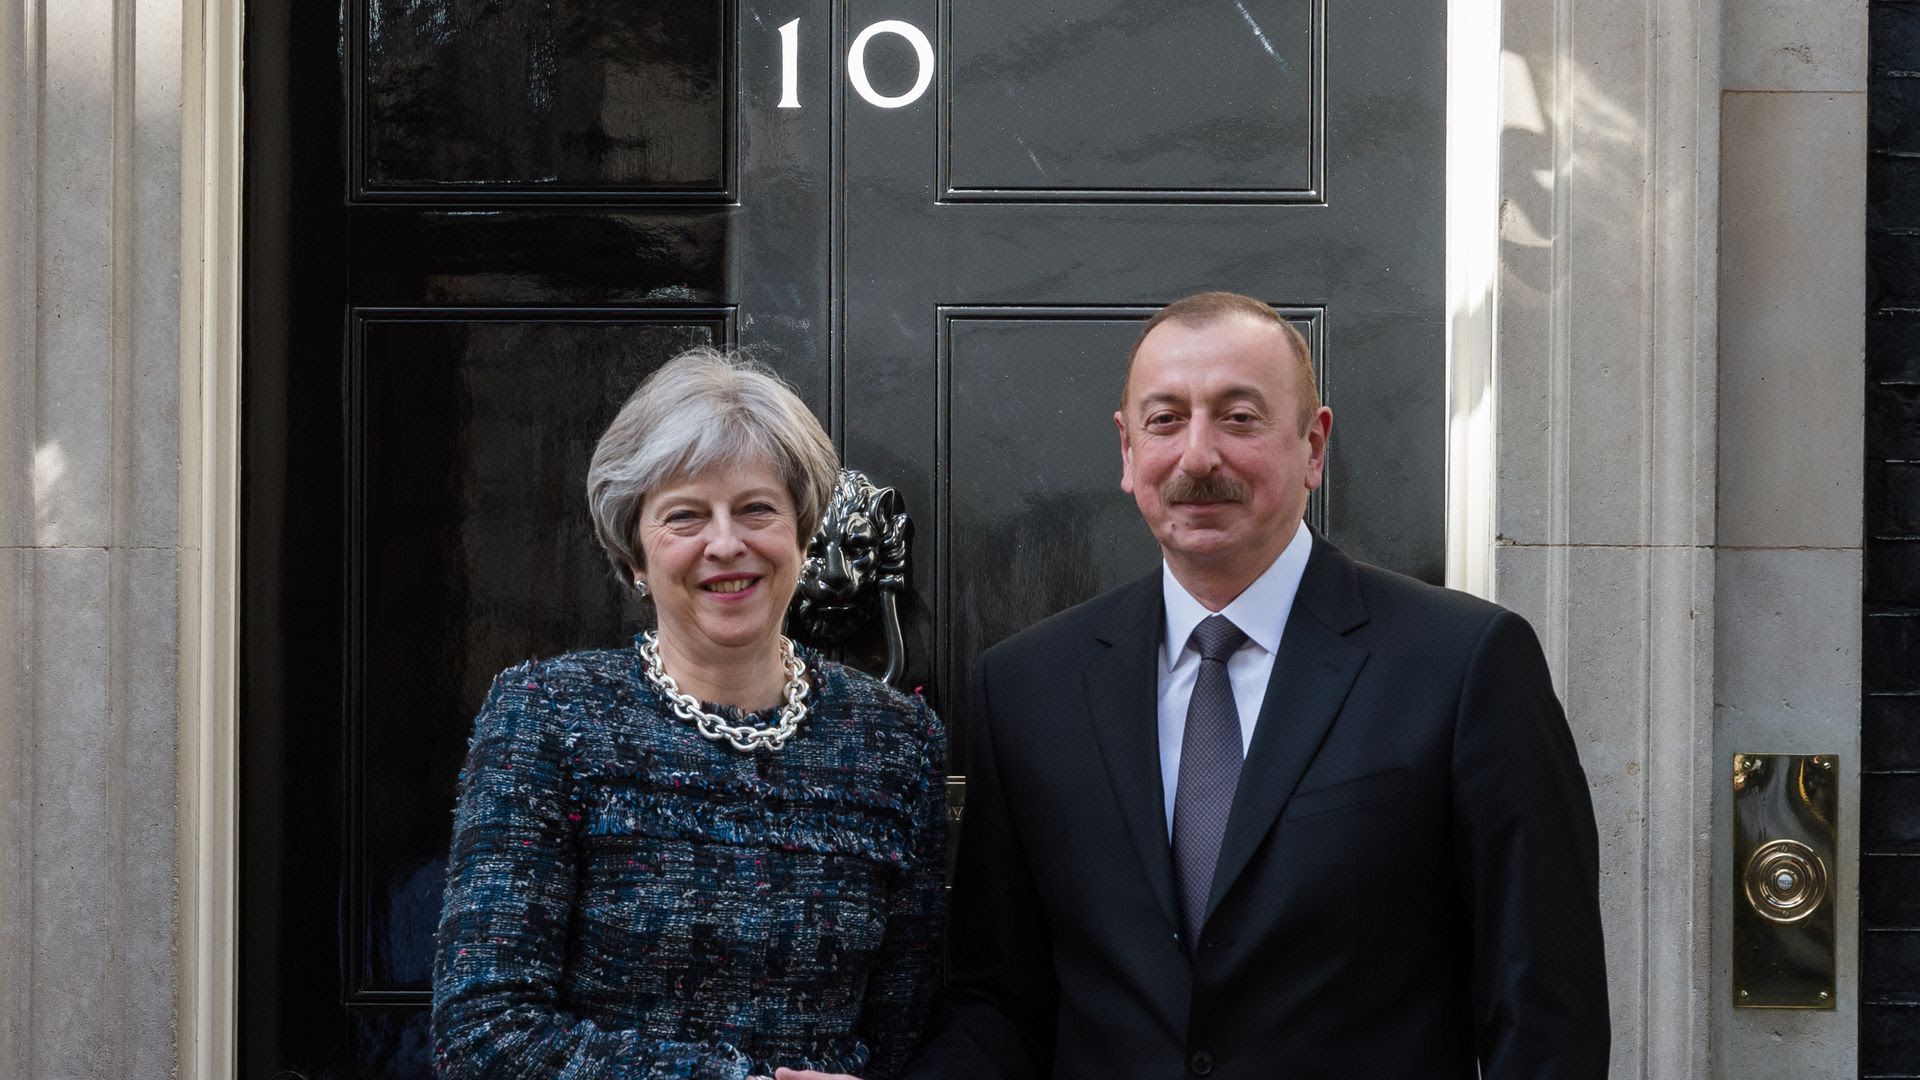 Azerbaijani President Ilham Aliyev and former UK prime minister theresa may